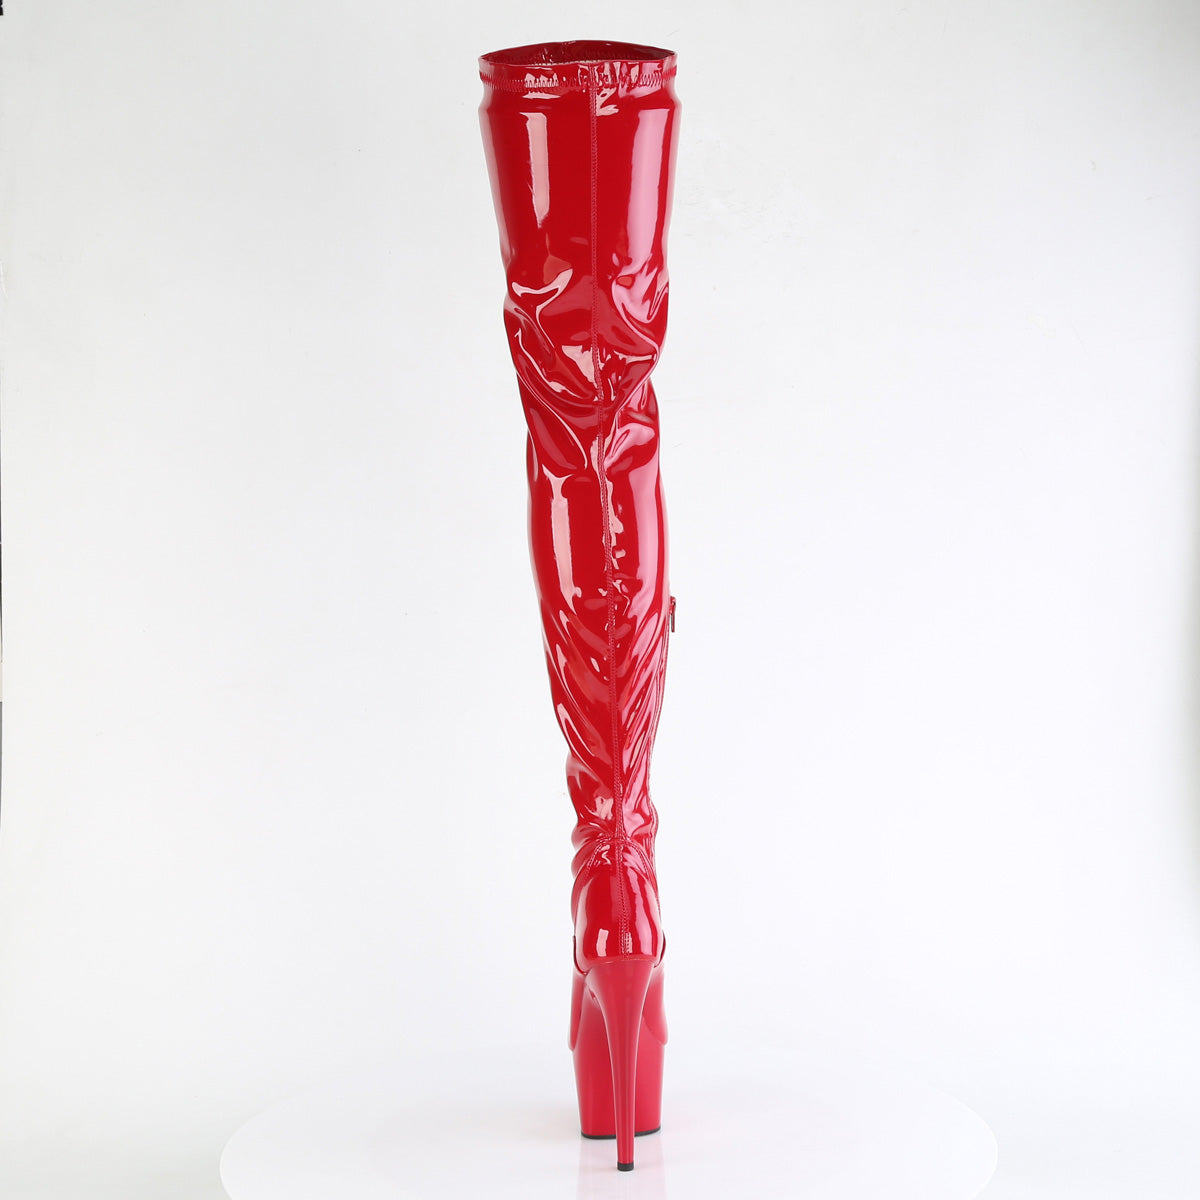 ADORE-4000 Red Patent Thigh High Platform Boots